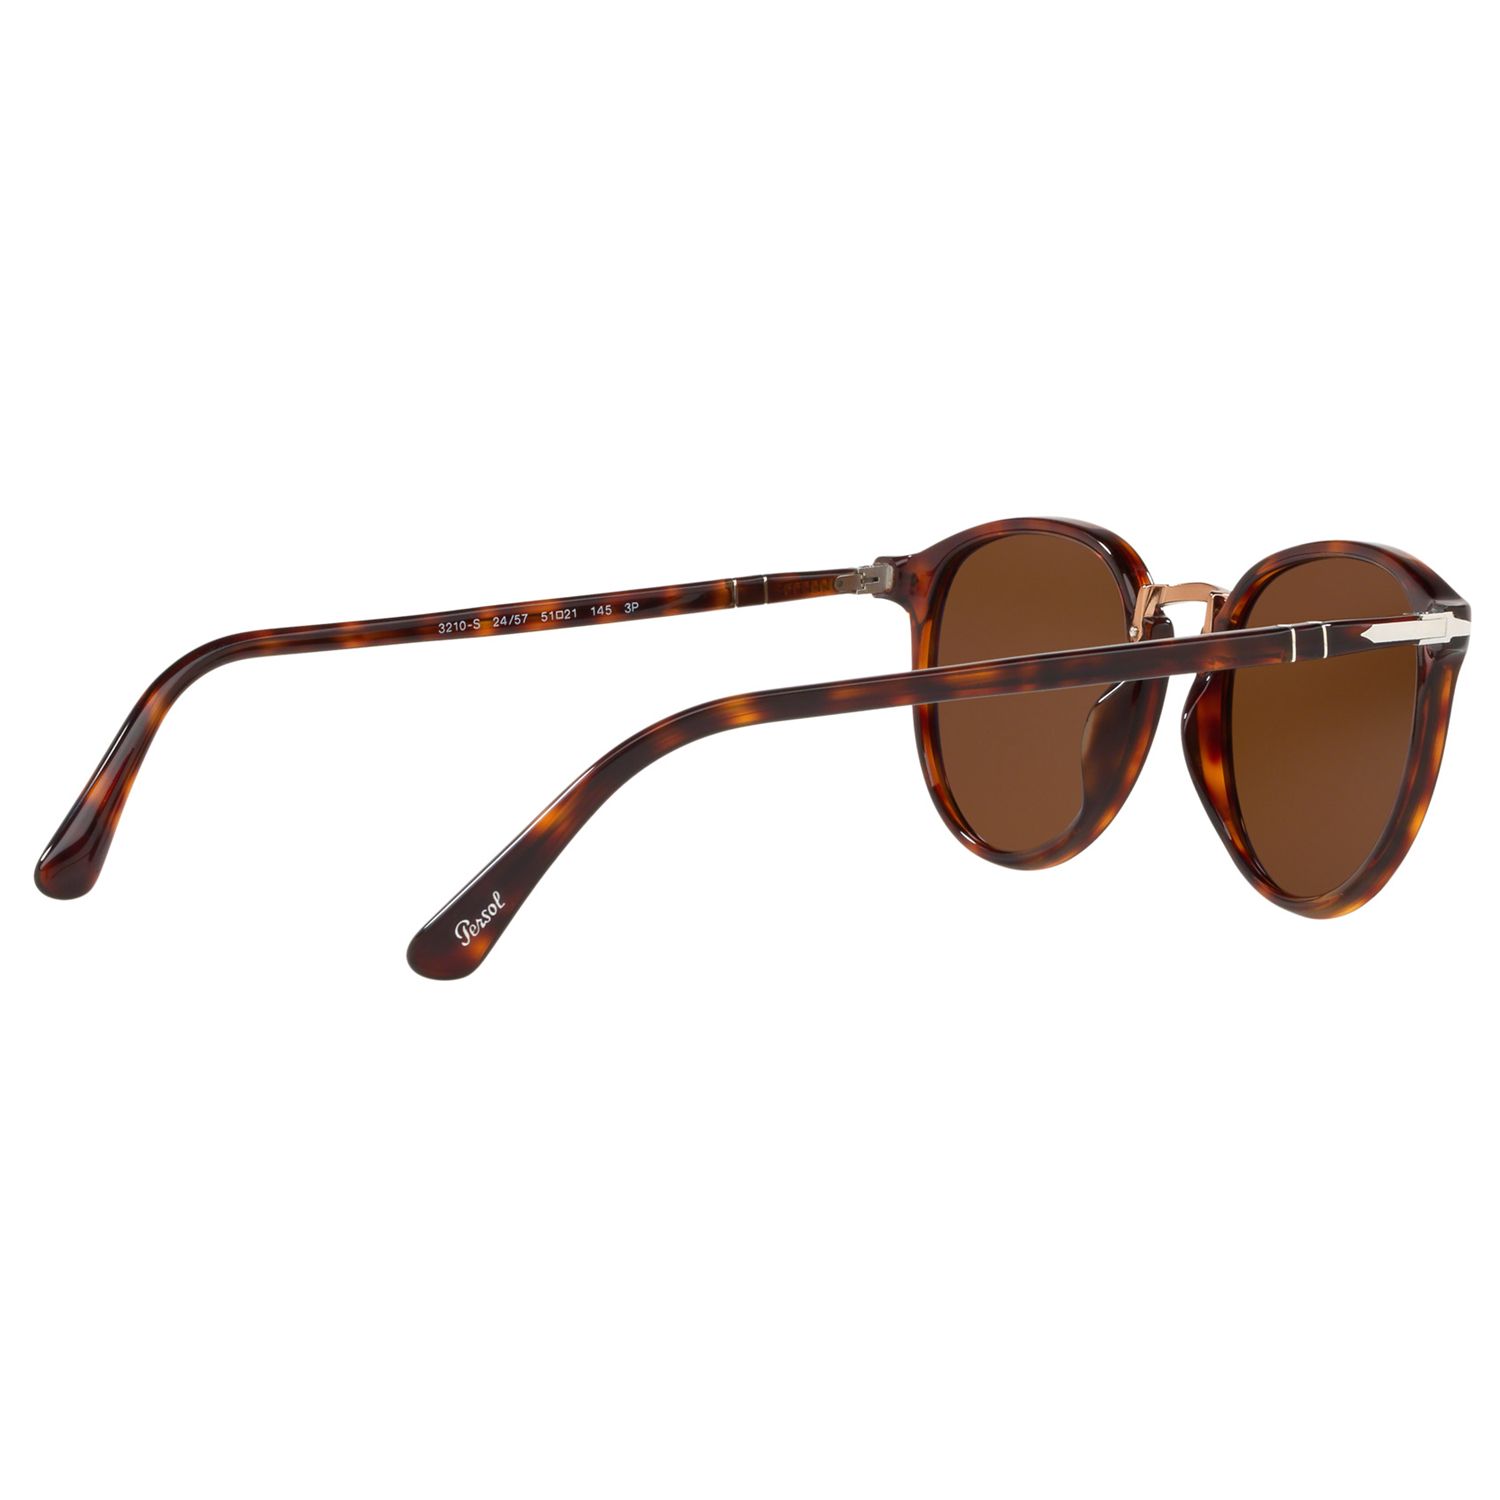 Buy Persol PO3210S Men's Polarised Oval Sunglasses, Tortoise/Brown Online at johnlewis.com